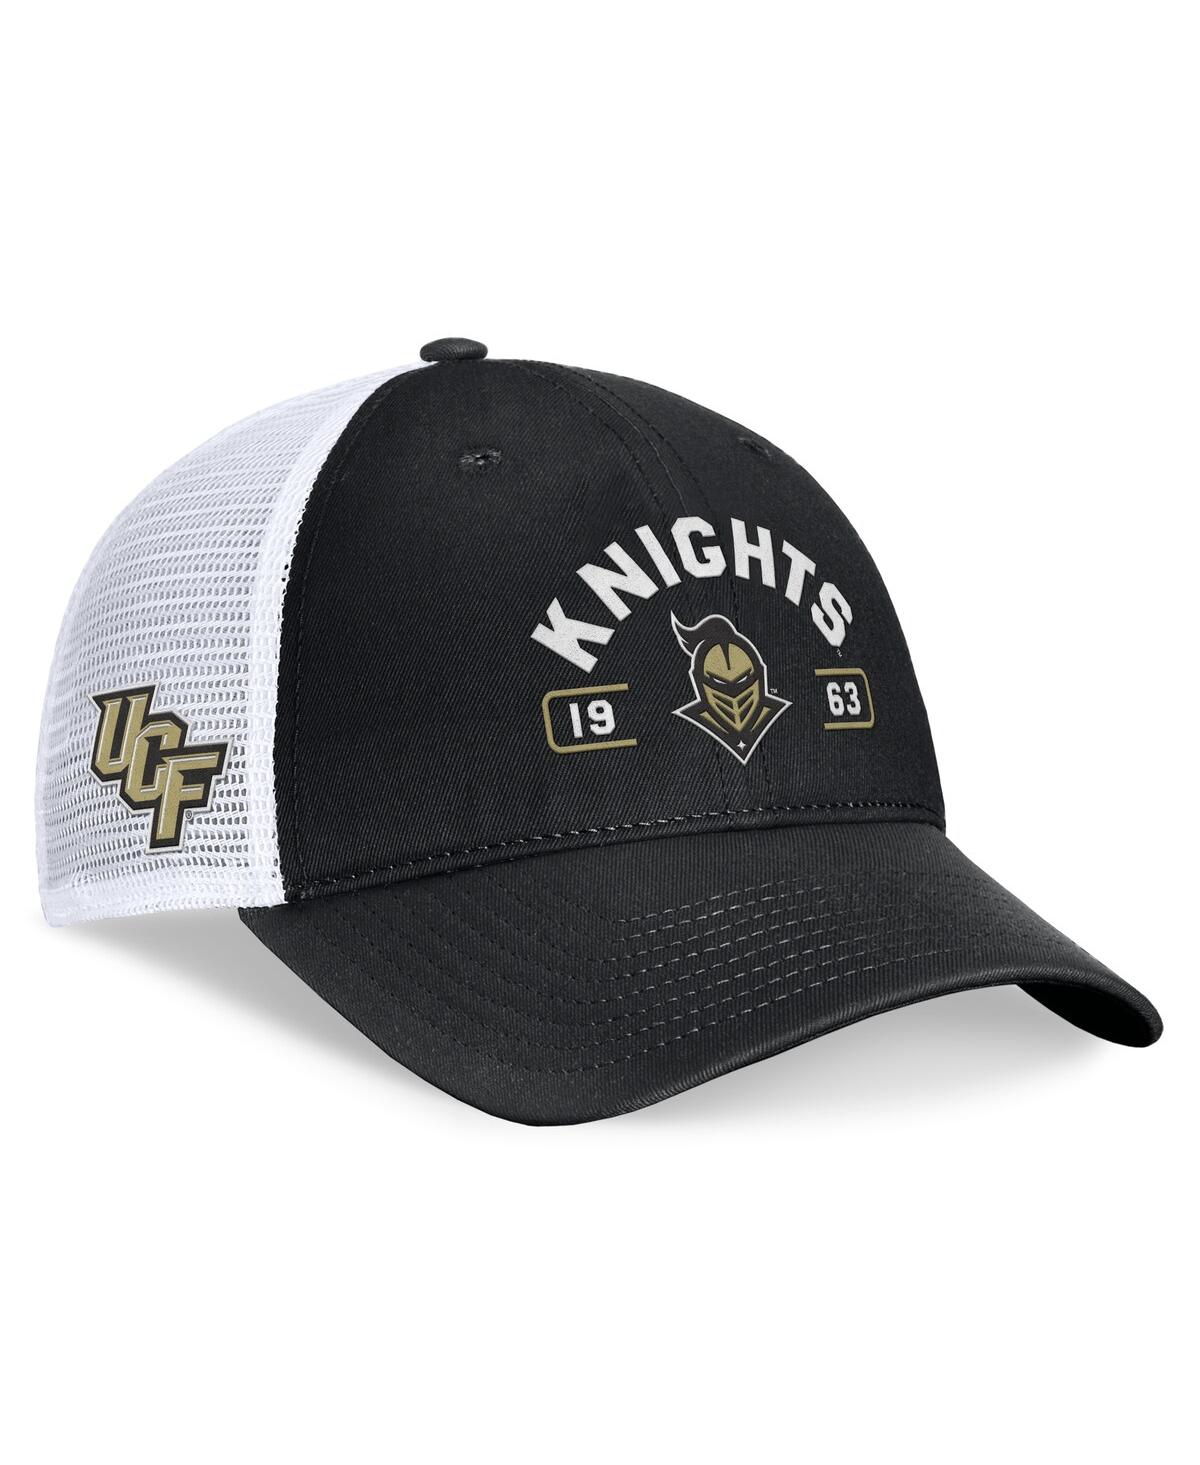 Men's / Ucf Knights Free Kick Trucker Adjustable Hat - Black, White